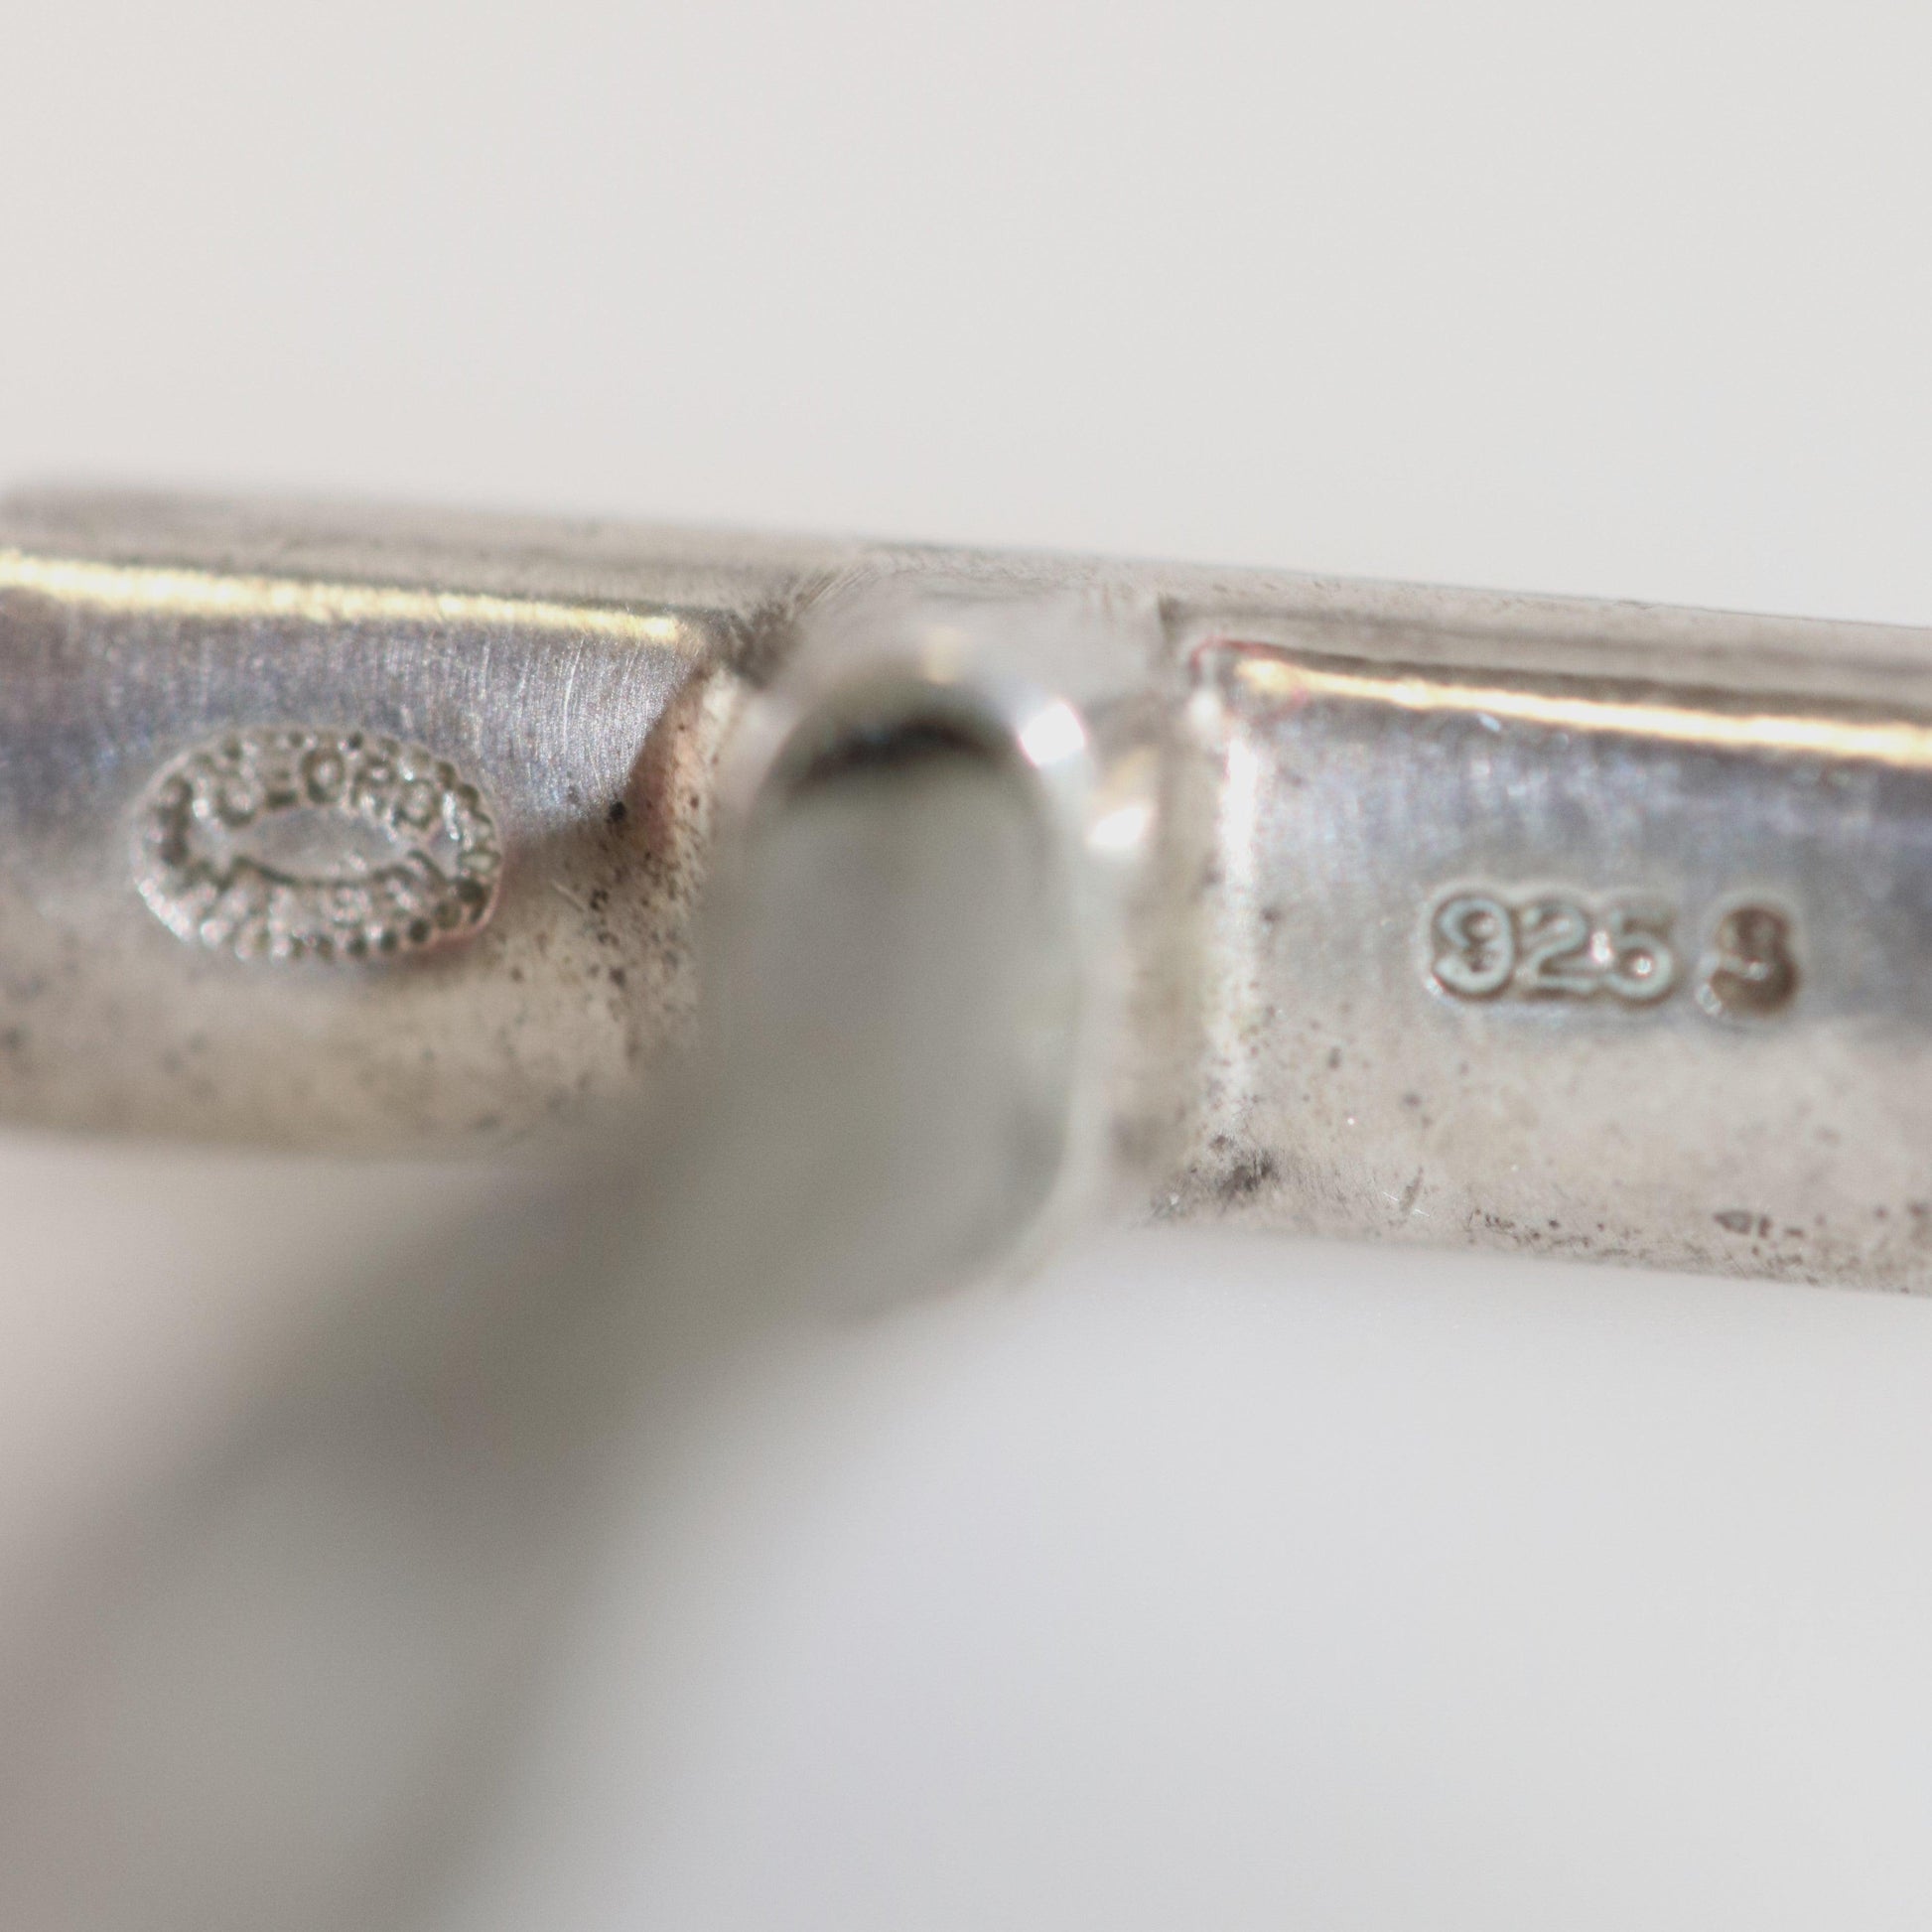 Vintage Georg Jensen Jewelry | Mid Century Magnifying Glass Pendant Necklace 400 - Carmel Fine Silver Jewelry